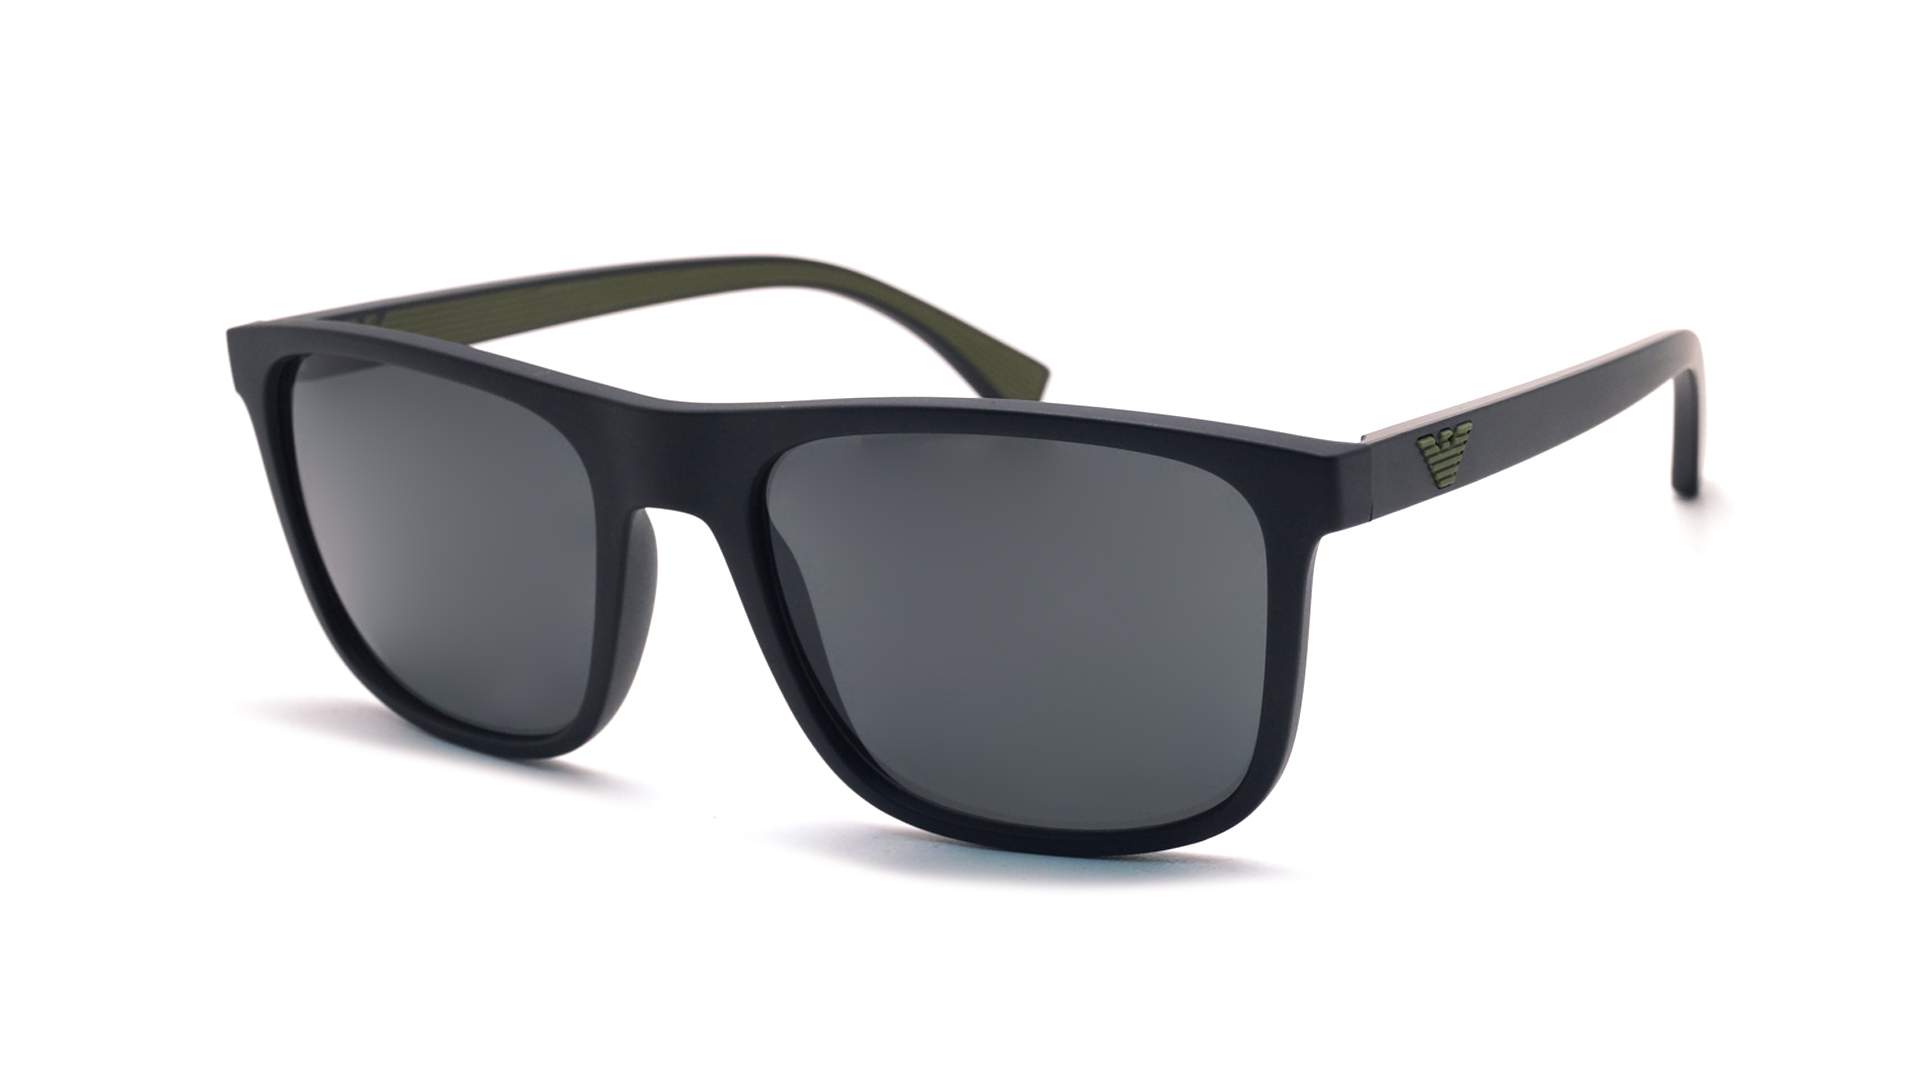 armani black sunglasses